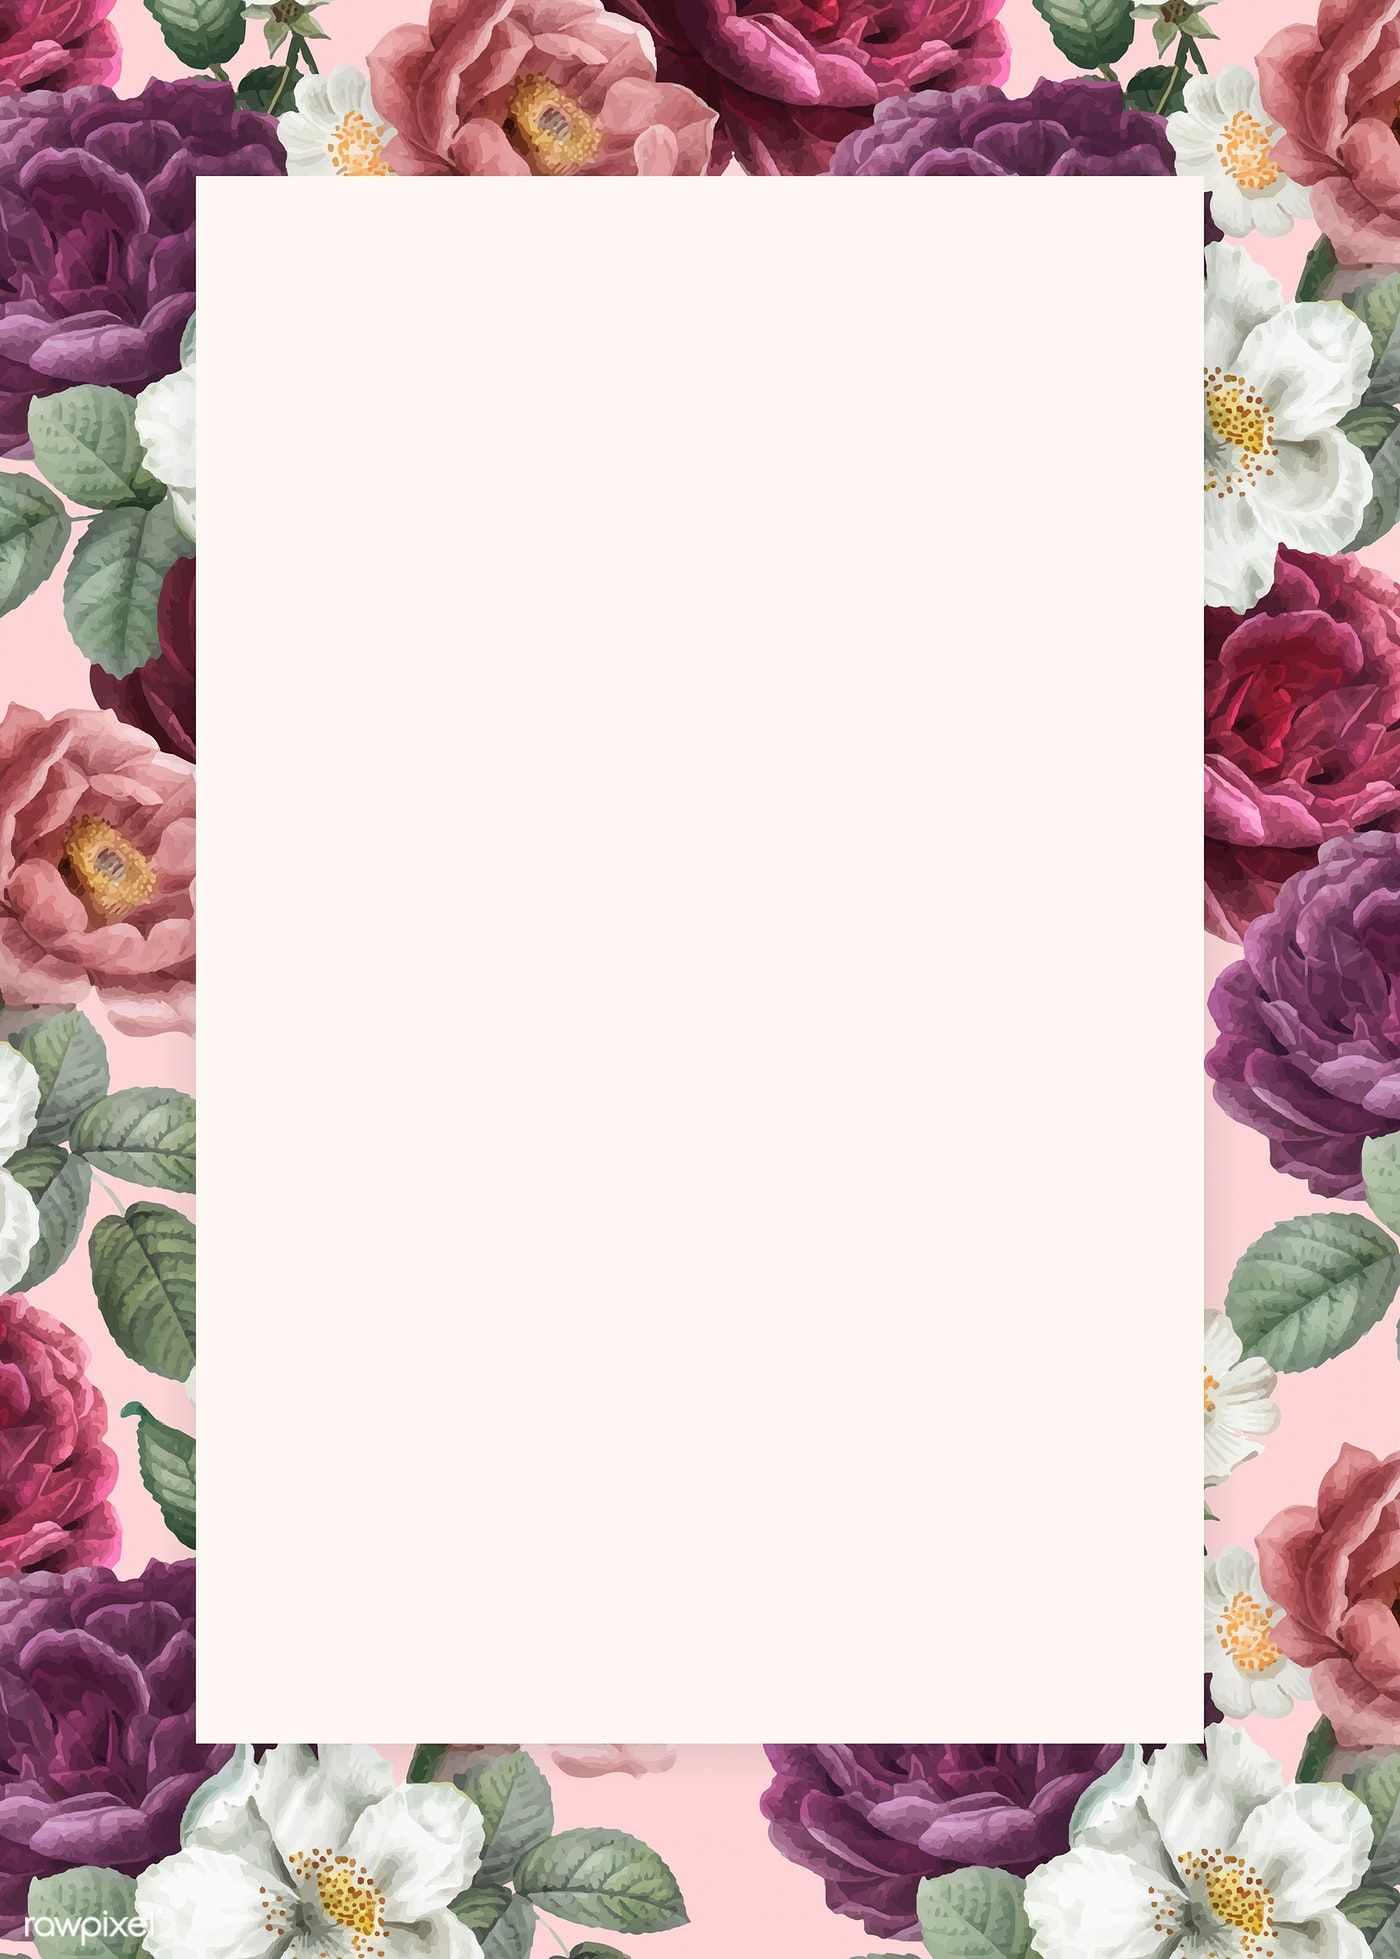 Download premium vector of Blank floral invitation card vector